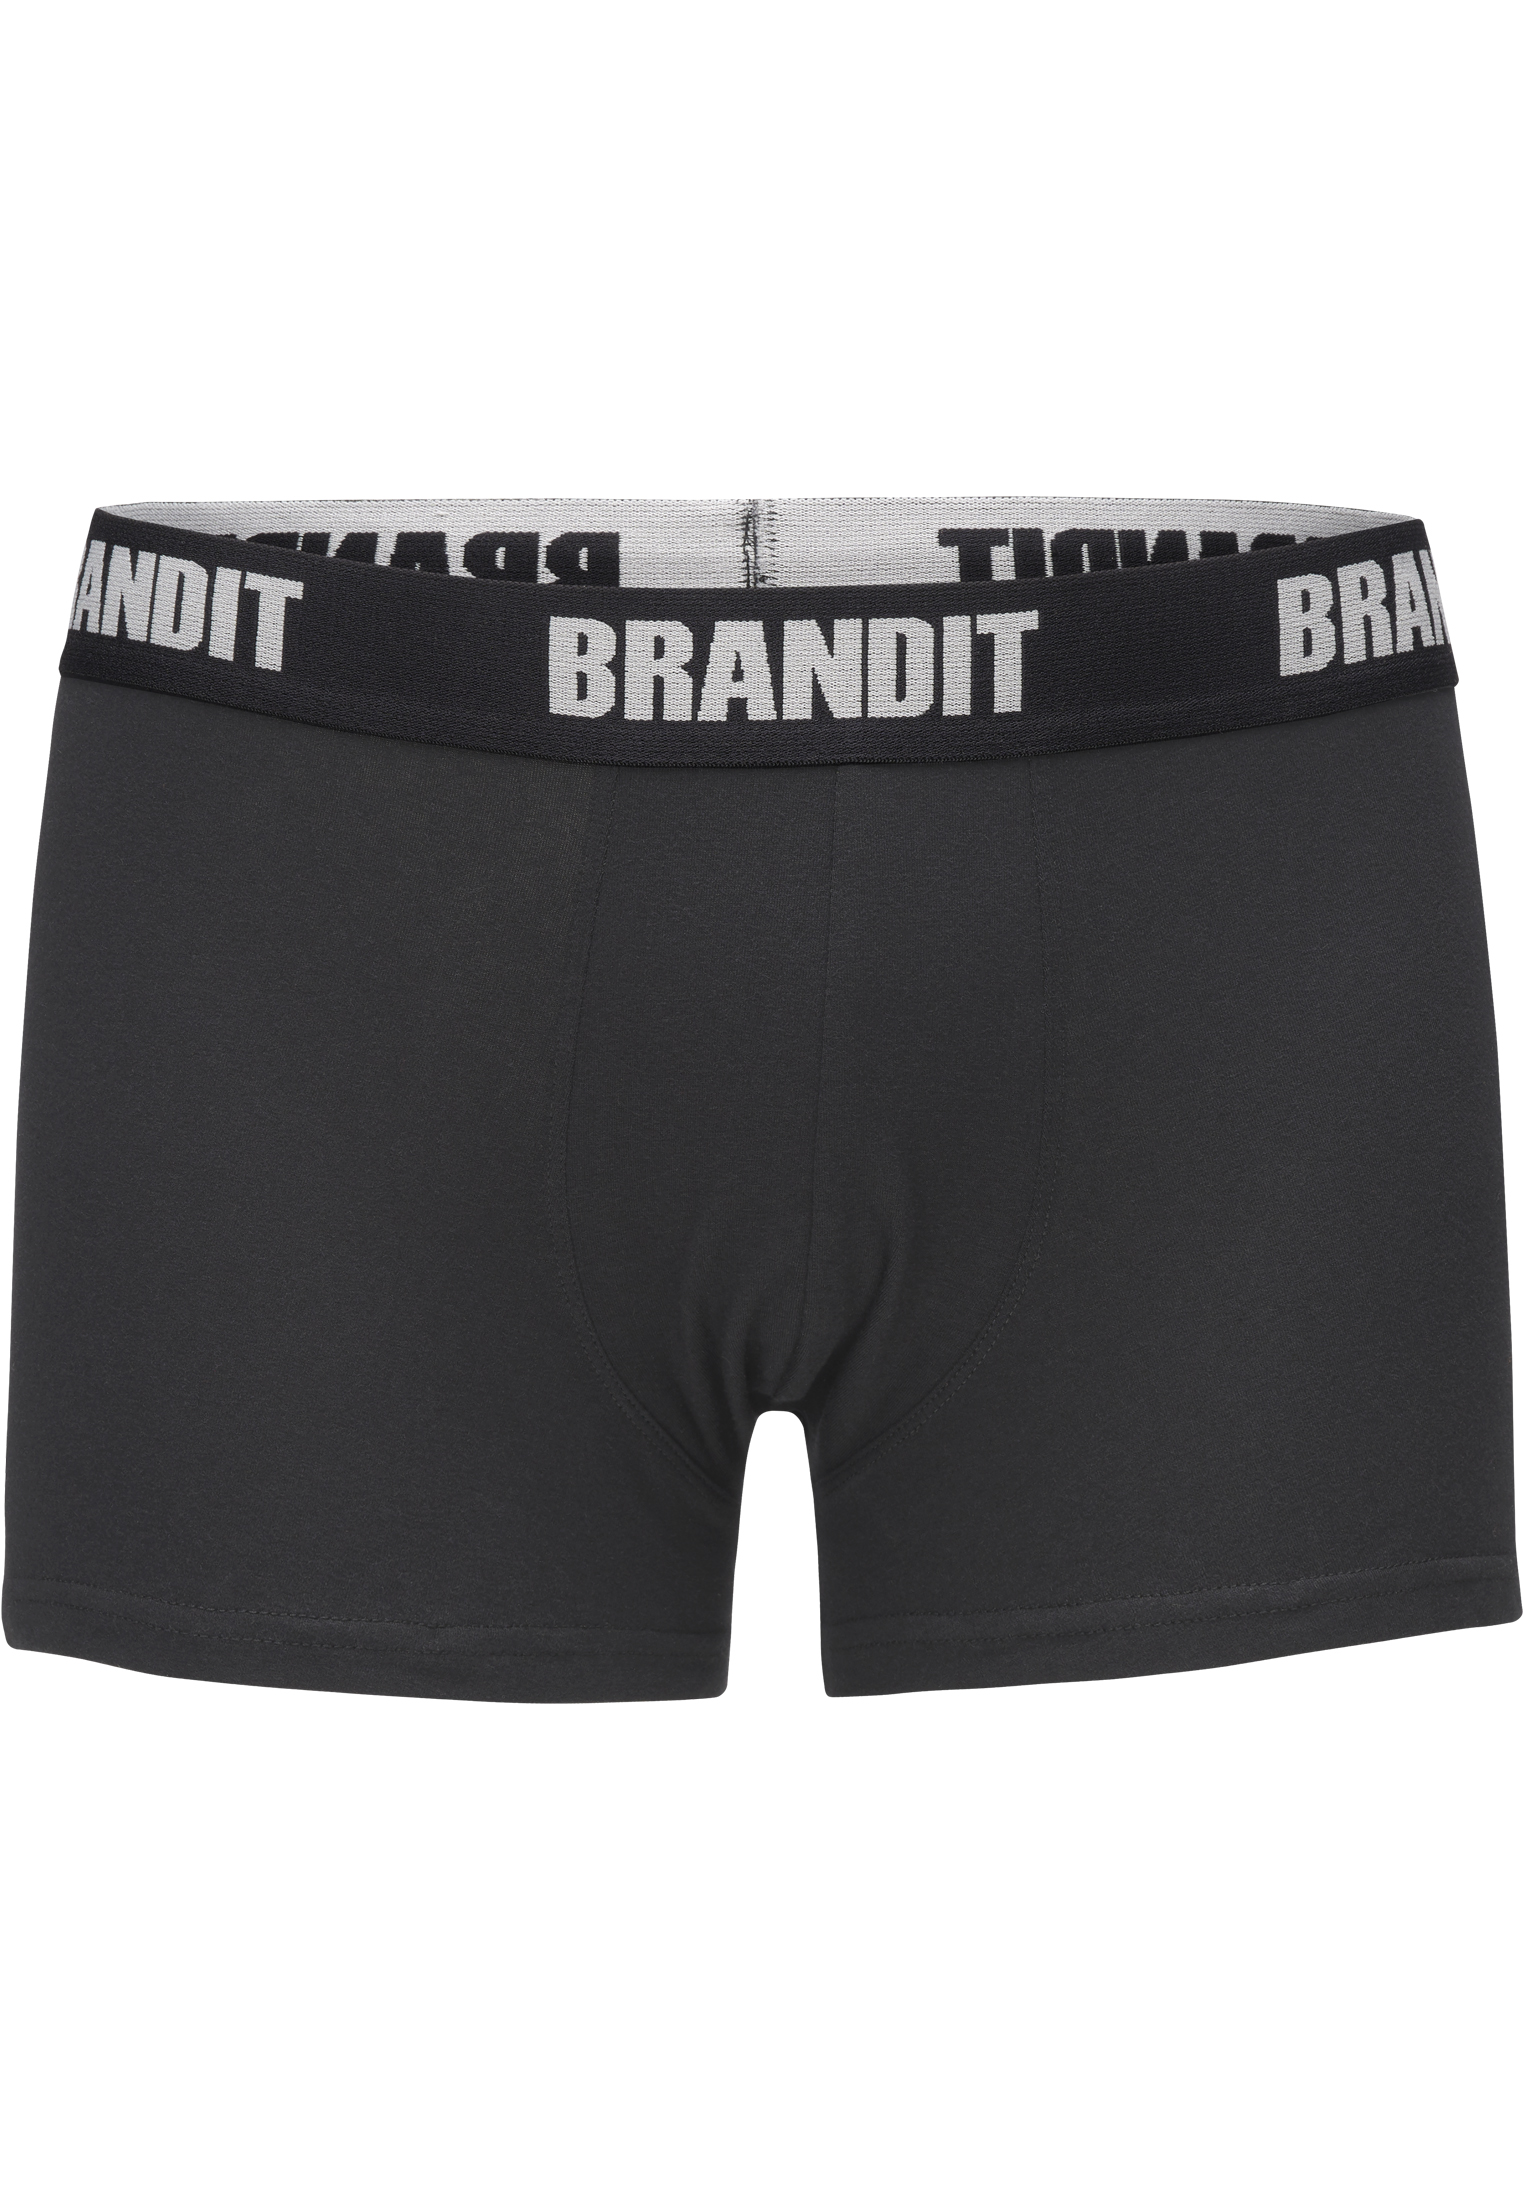 Underwear Boxershorts Logo 2er Pack in Farbe black/black